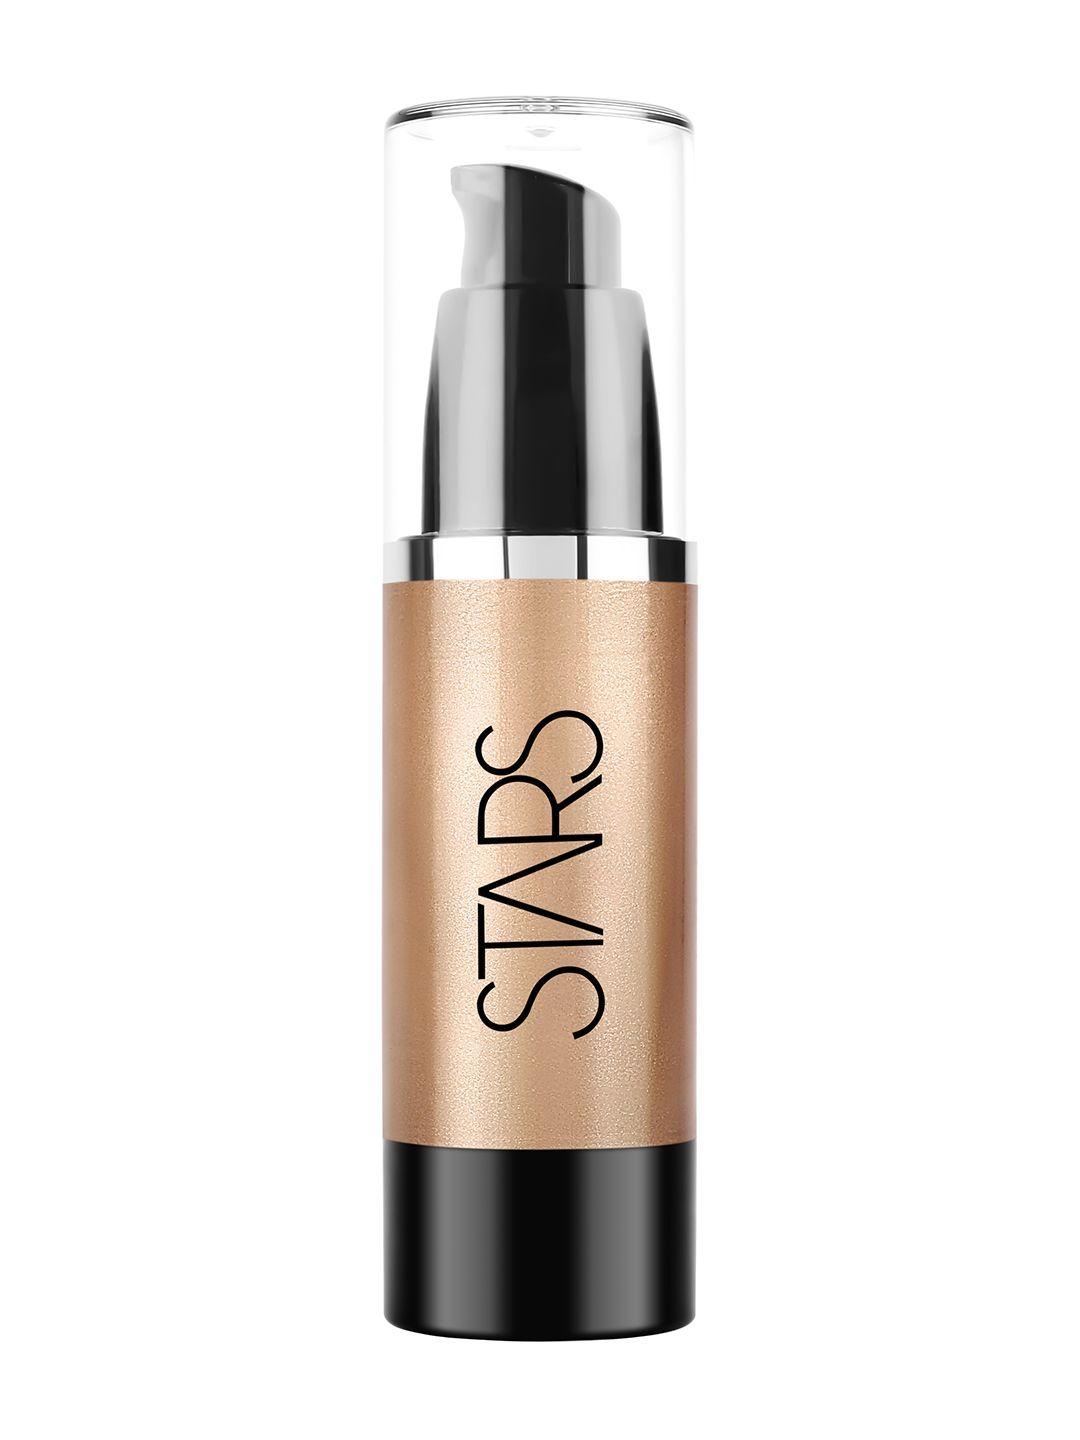 Stars Cosmetics Reflect Illuminator Liquid Highlighter 40 ml - Soft Bronze